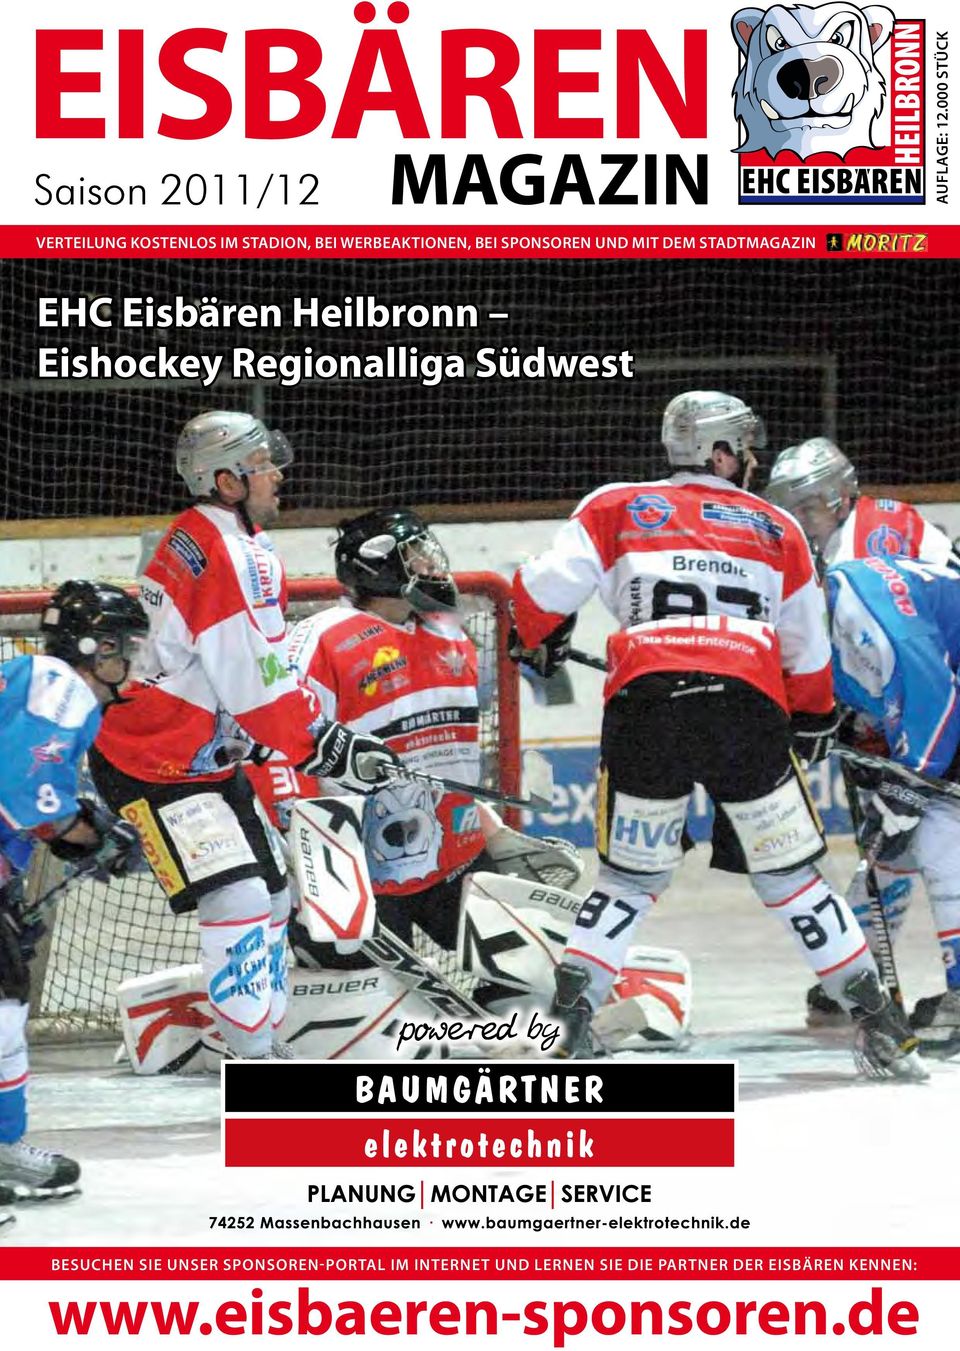 dem Stadtmagazin EHC Eisbären Heilbronn Eishockey Regionalliga Südwest powered by